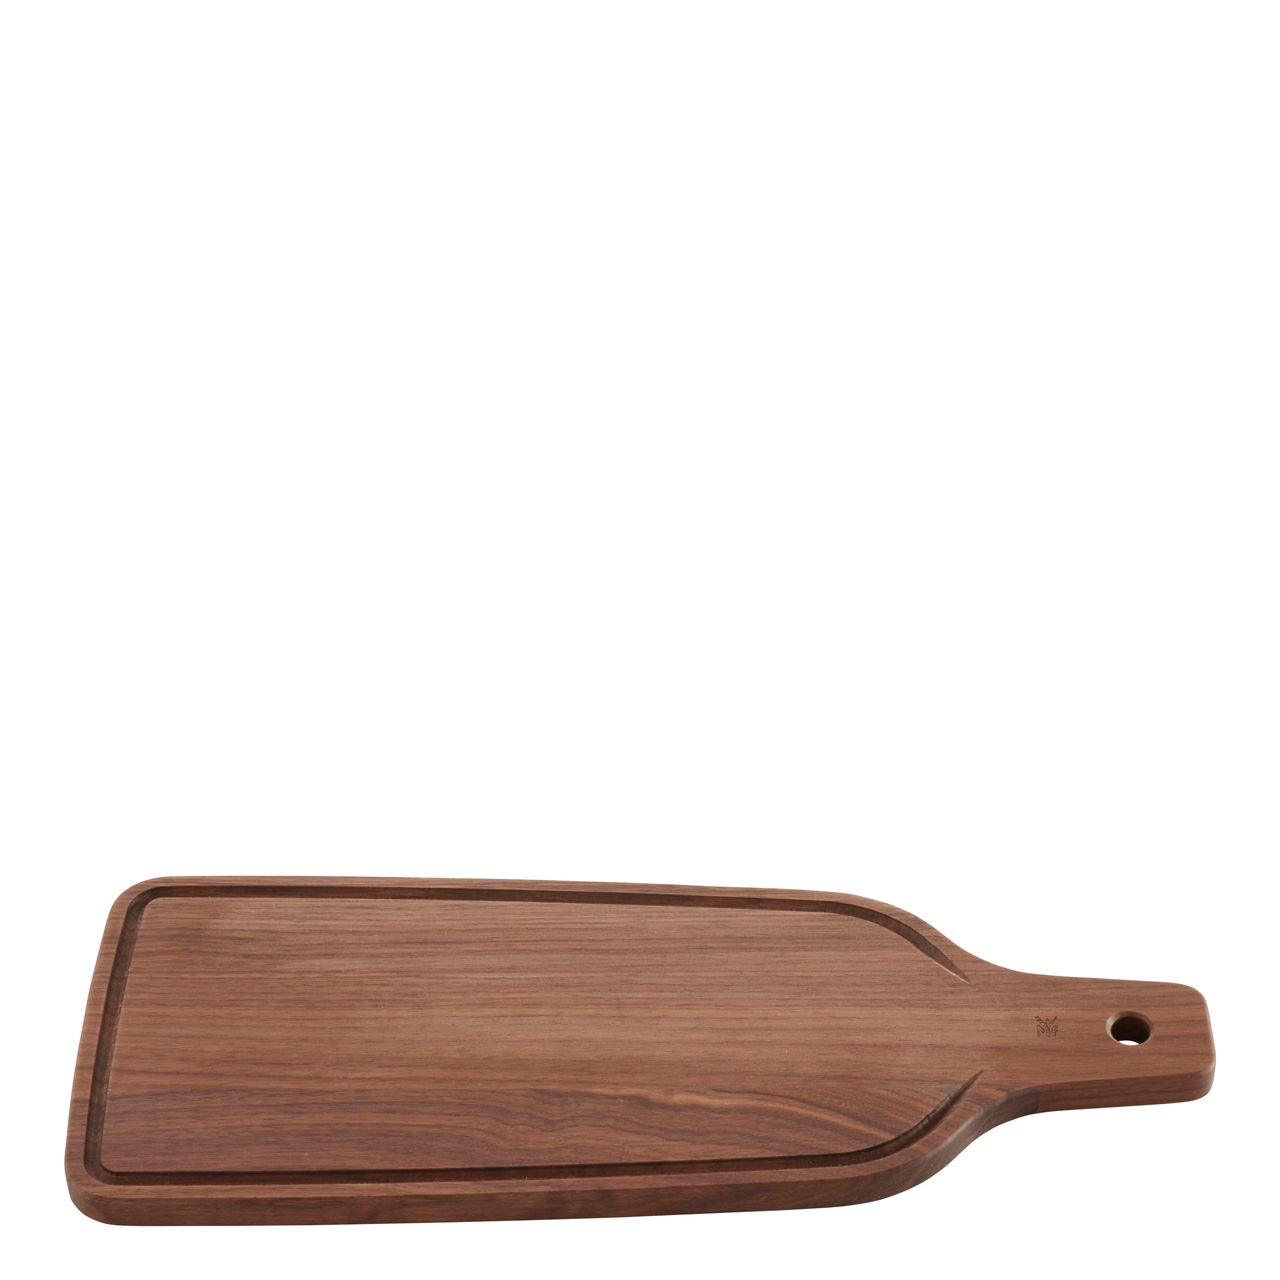 Server wood (walnut) rectangular 40x16cm